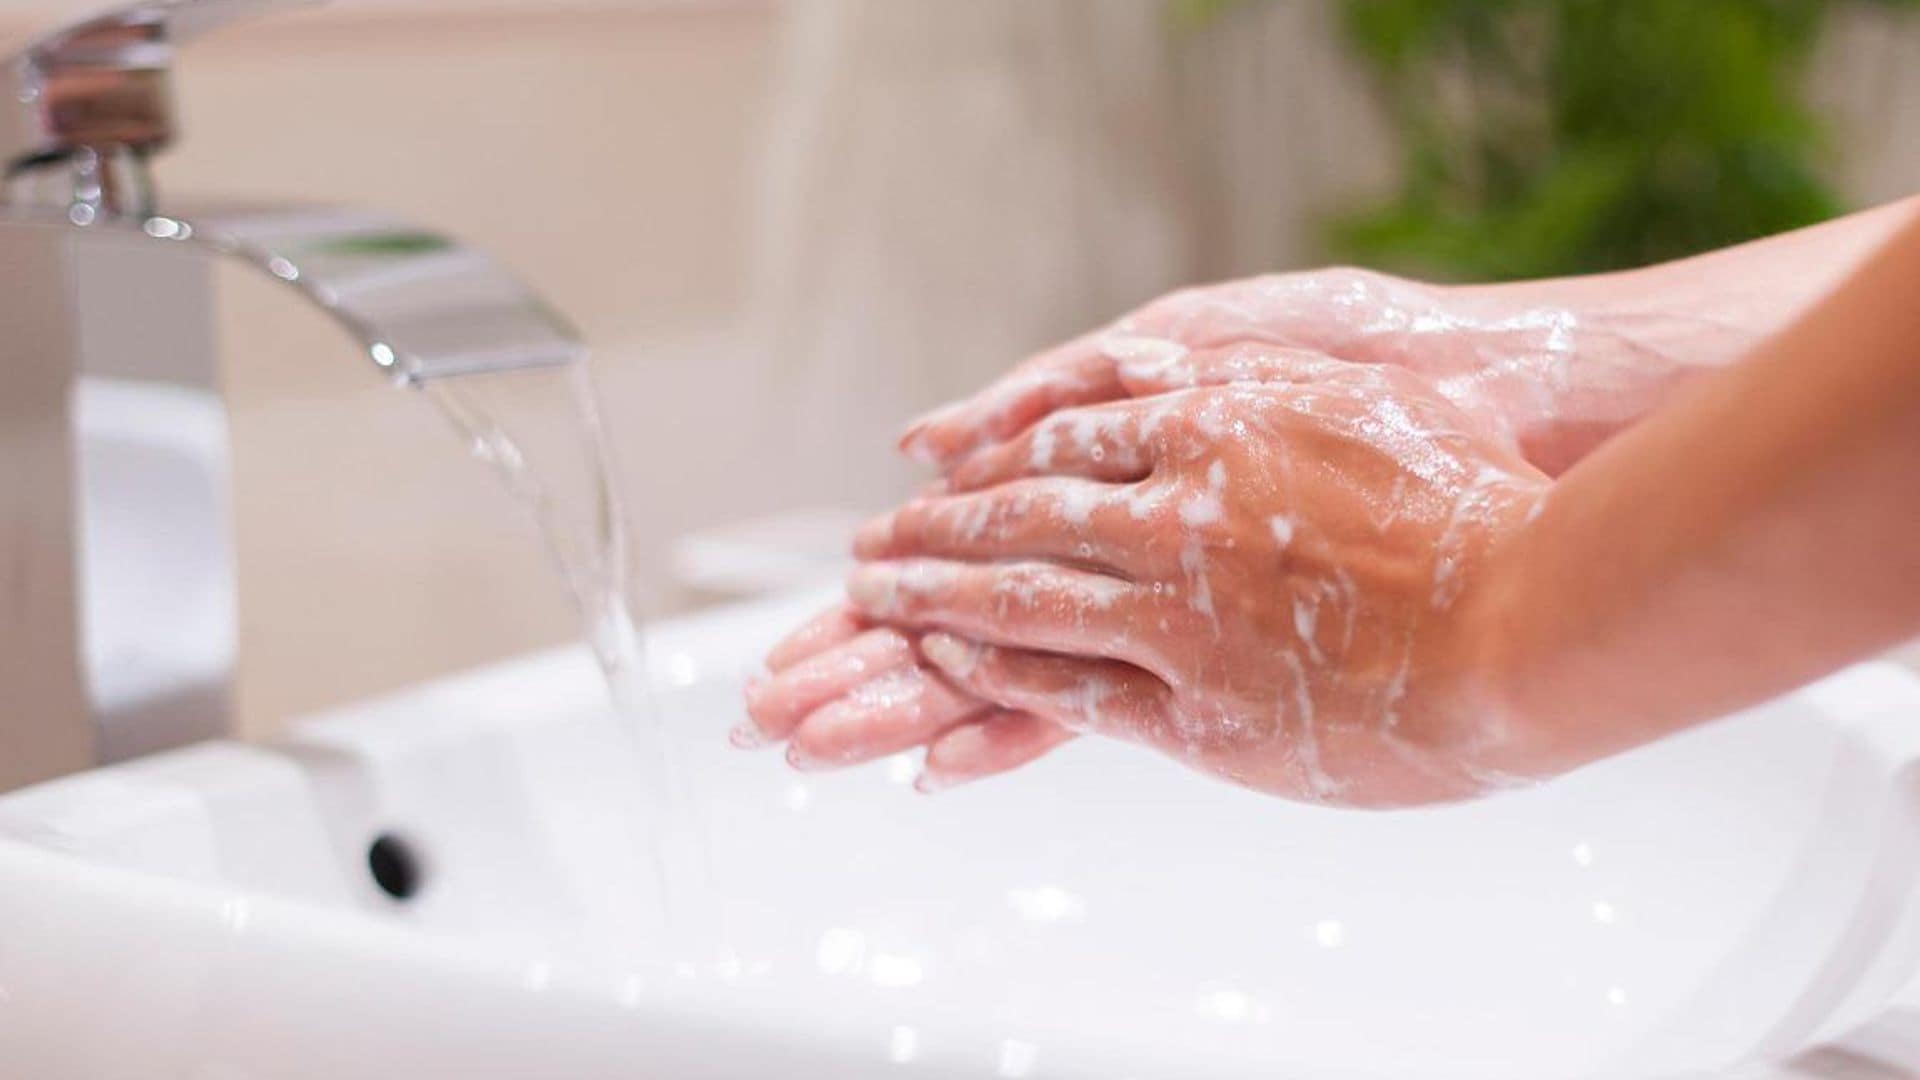 Top tips for effective hand washing amid the Coronavirus pandemic